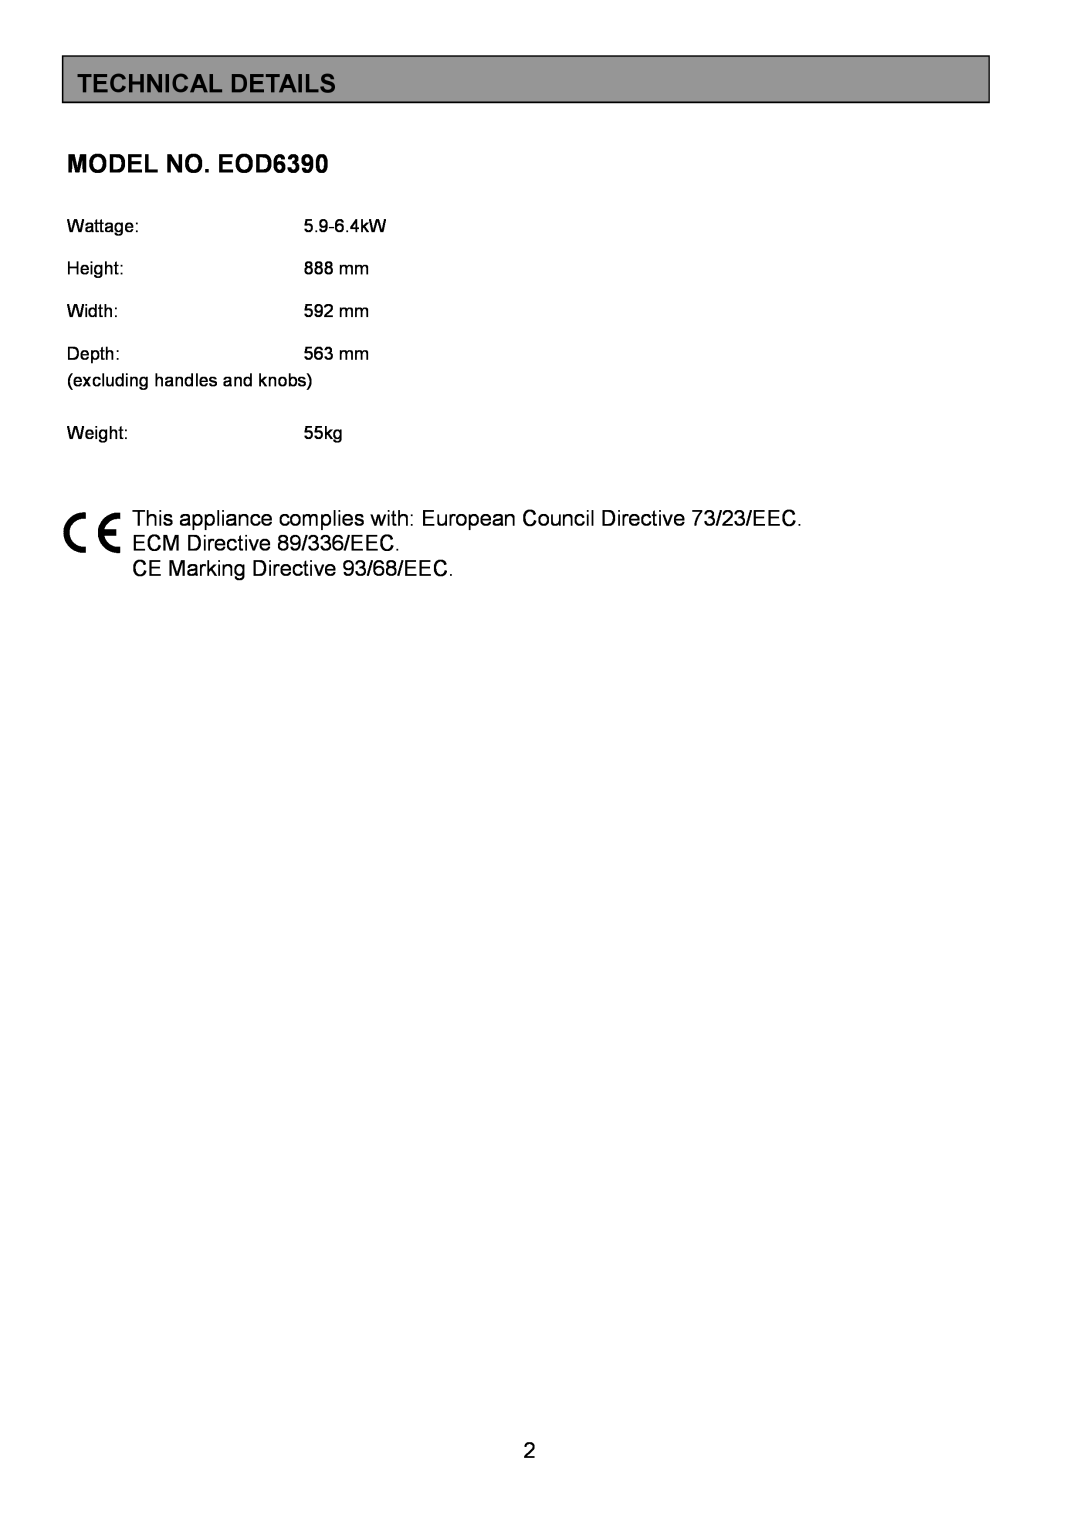 Electrolux manual Technical Details, MODEL NO. EOD6390, CE Marking Directive 93/68/EEC 